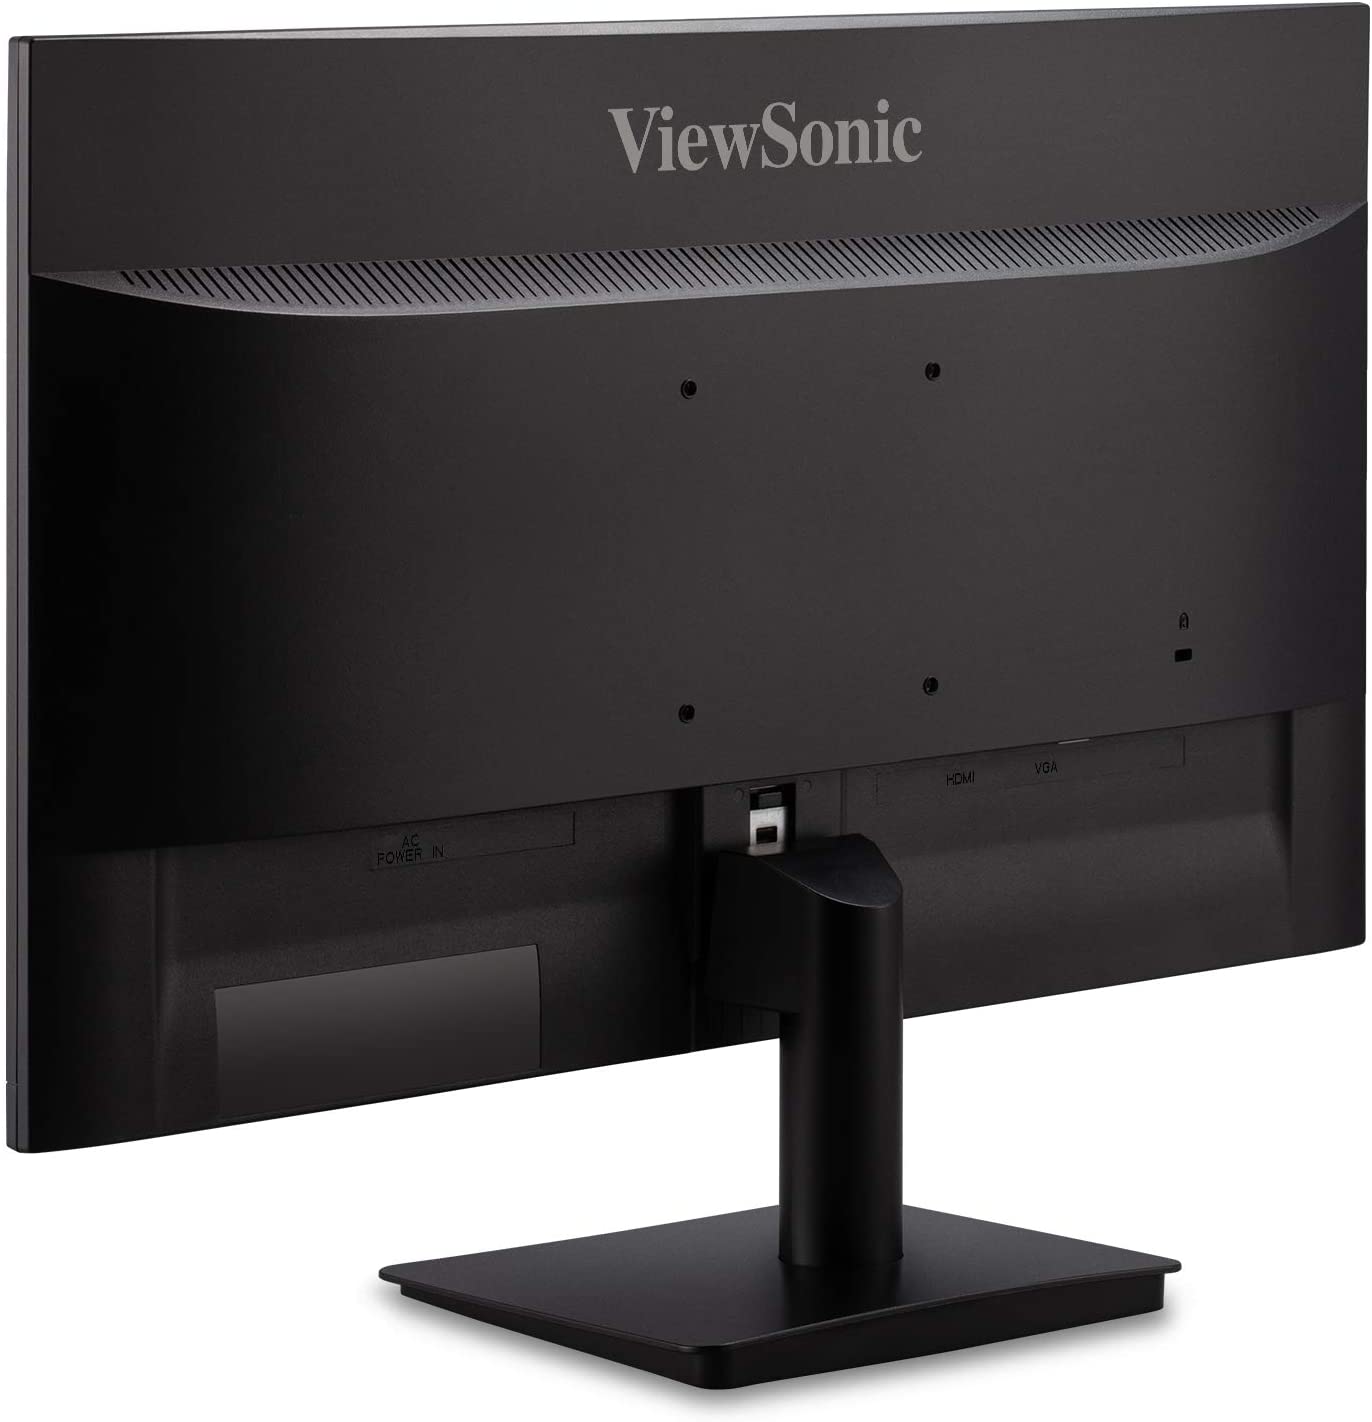 ViewSonic VA2405-H-S 24 1080p AMD FreeSync, Eye Care and HDMI LED Monitor - Certified Refurbished